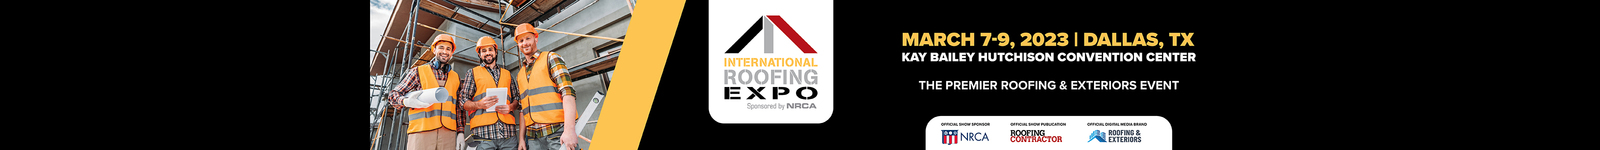 International Roofing Expo (IRE) 2023 logo